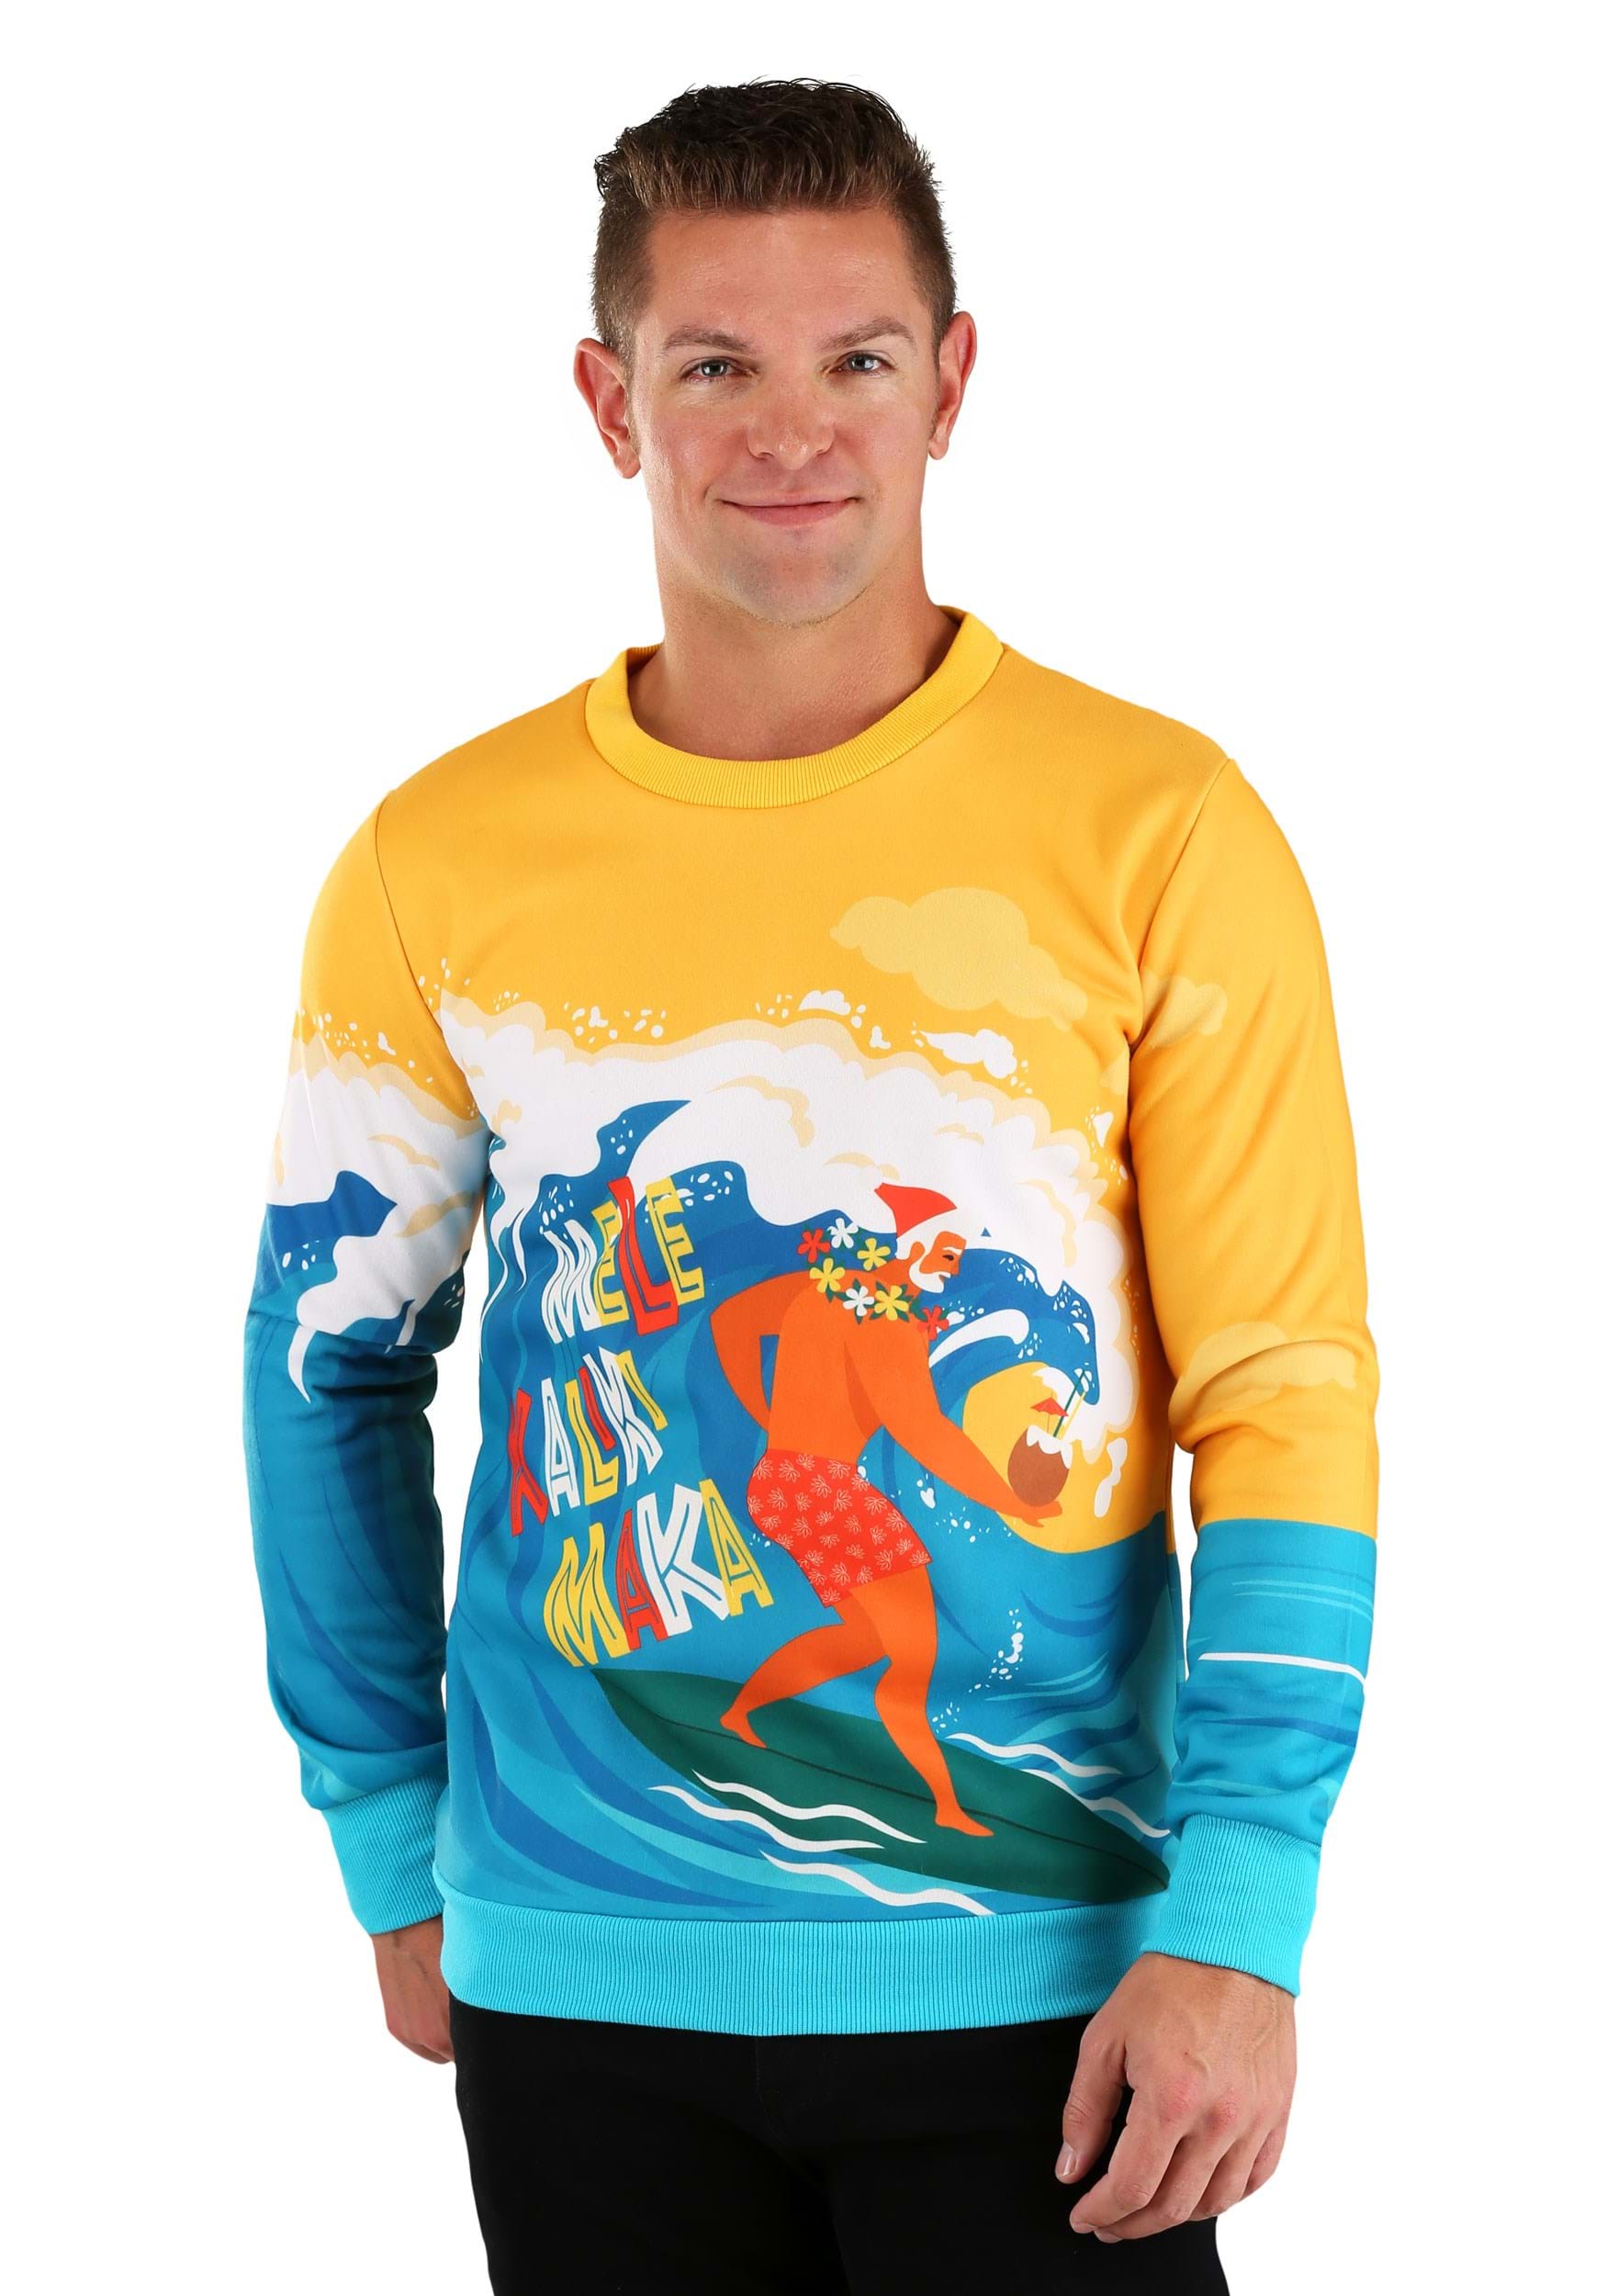 Mele Kalikimaka Surfing Santa Ugly Christmas Sweatshirt for Adults